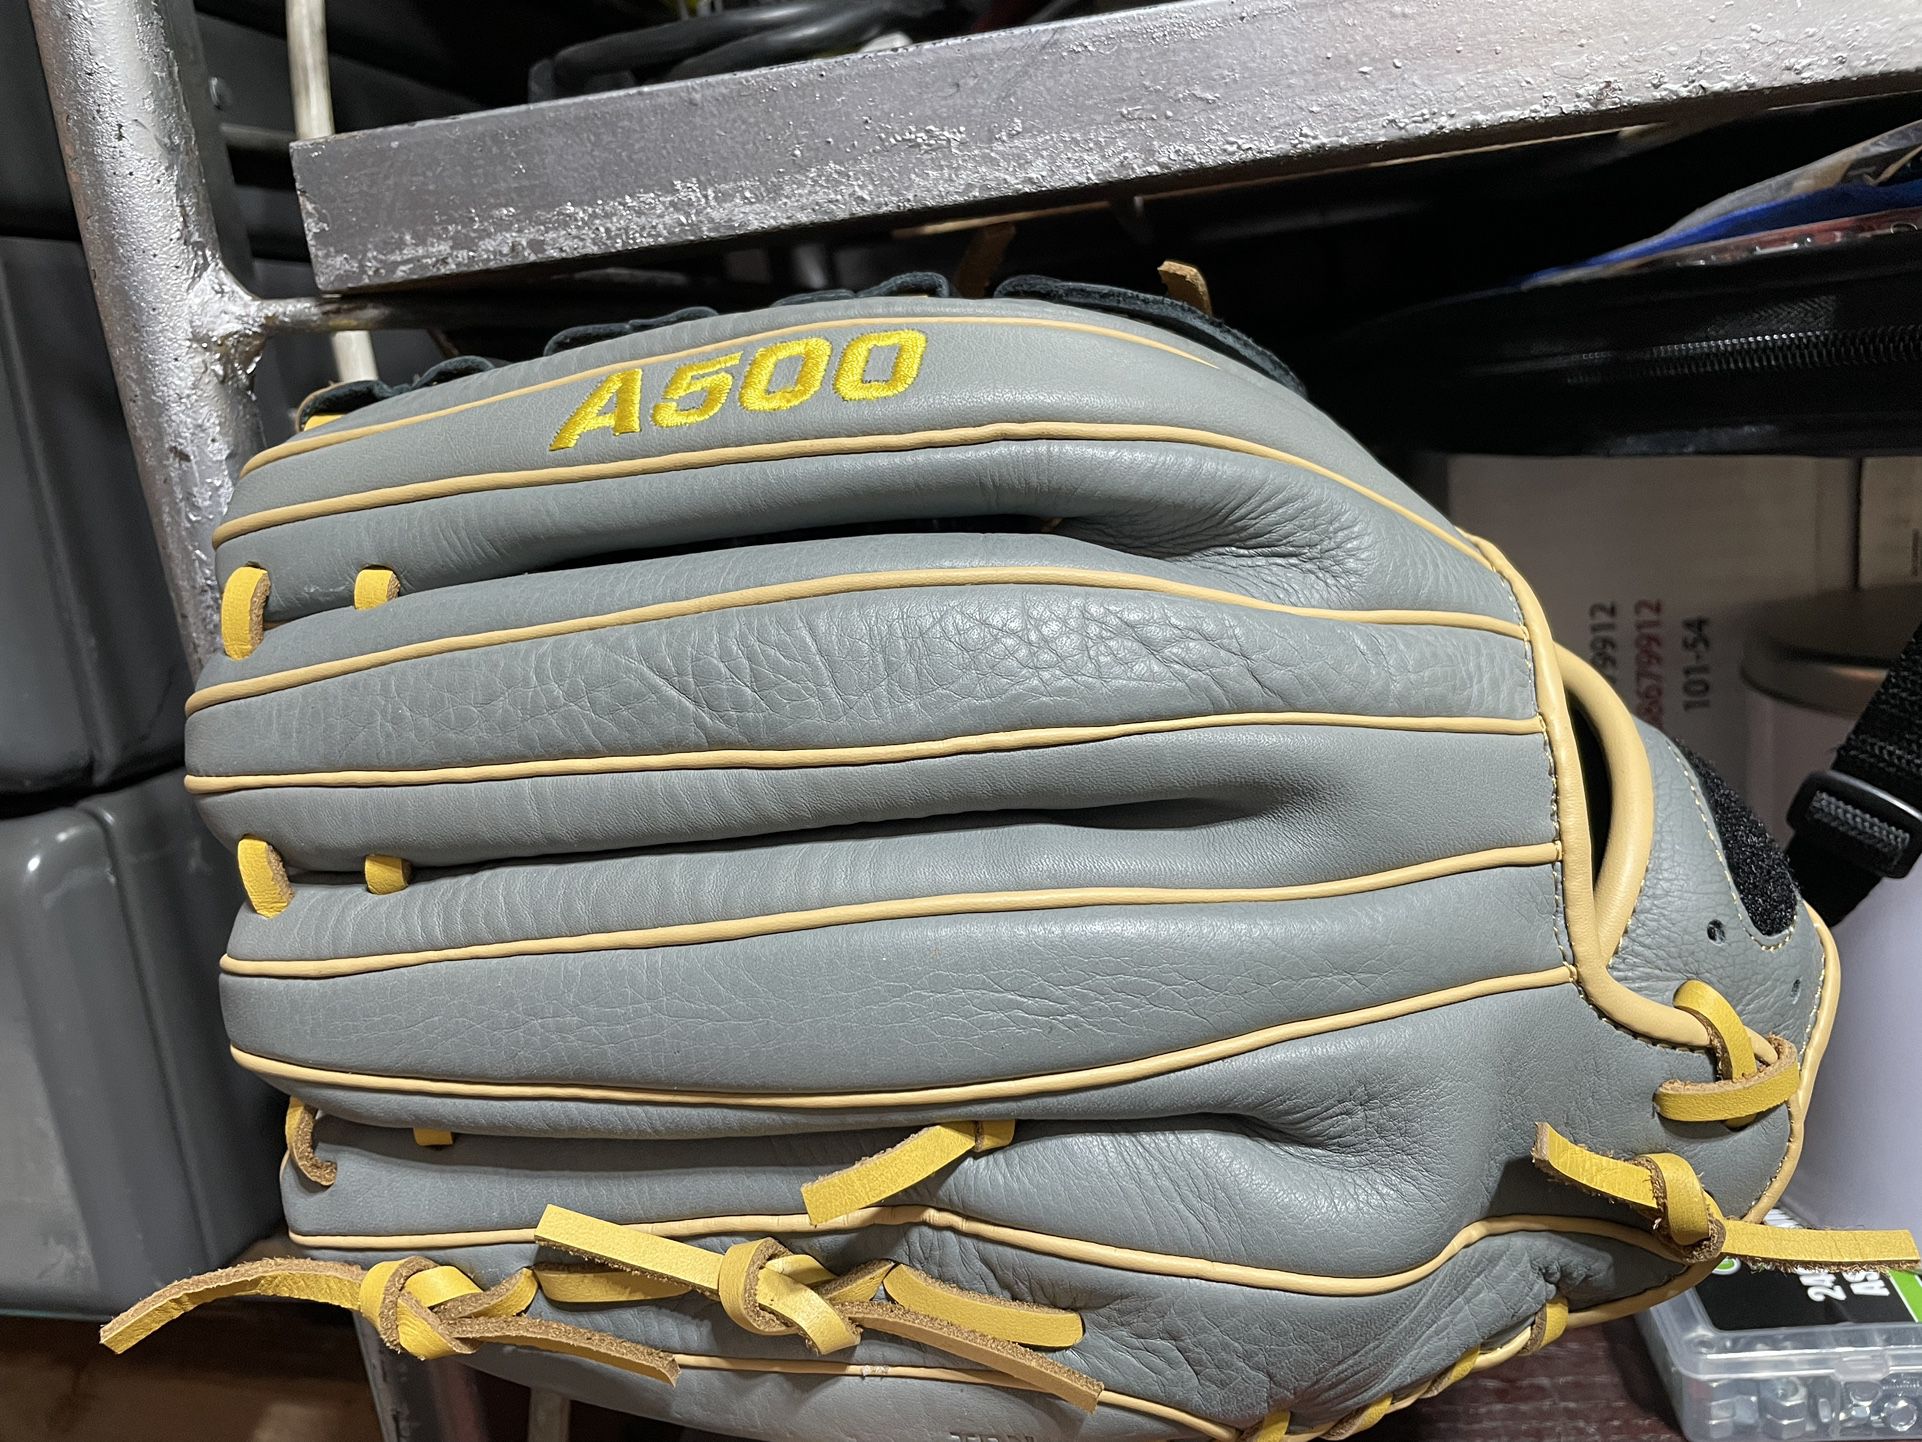  Softball Glove